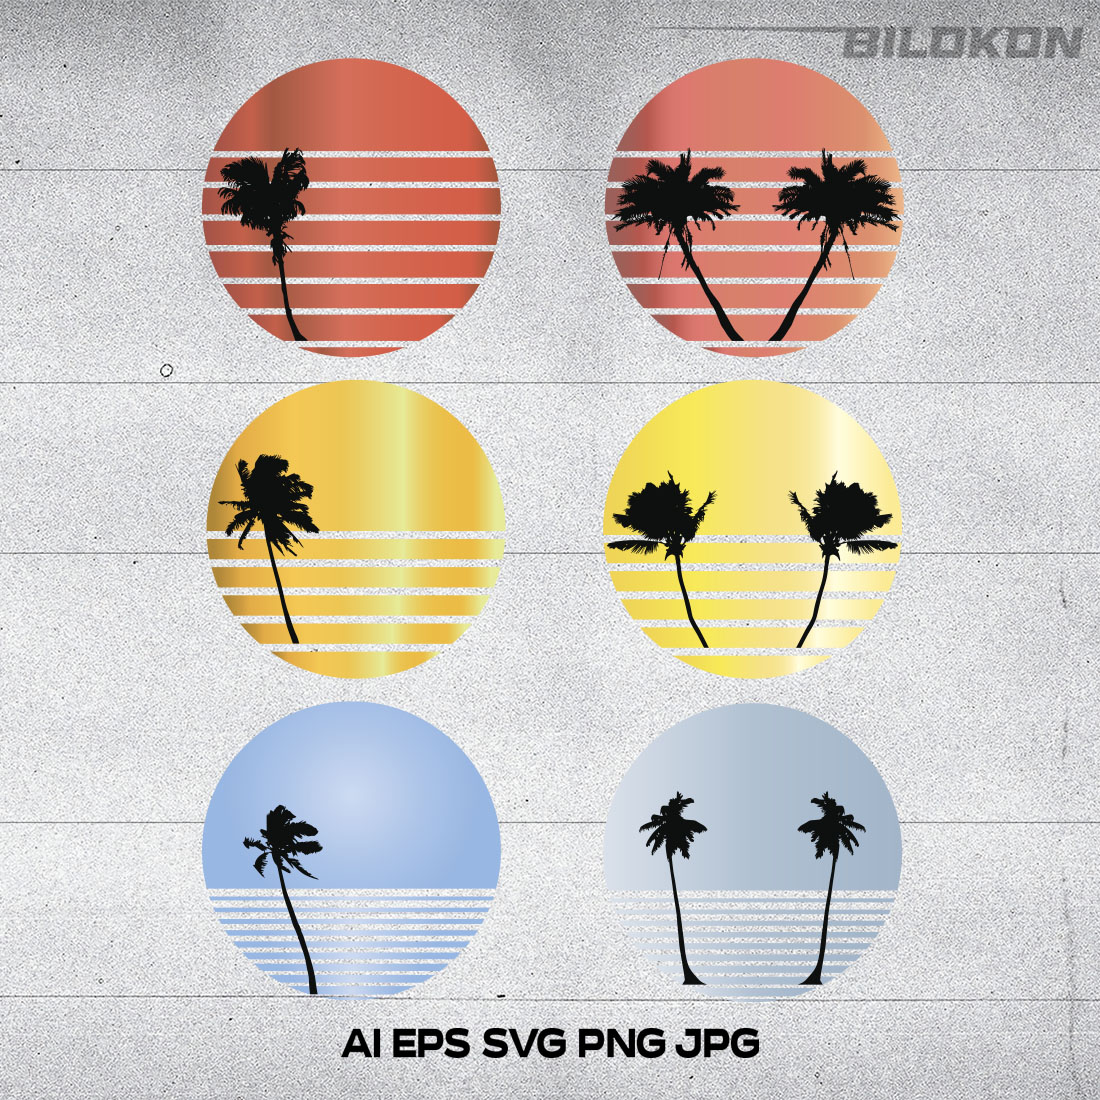 Retro Sunset and Palm Tree Icon Set Design cover image.